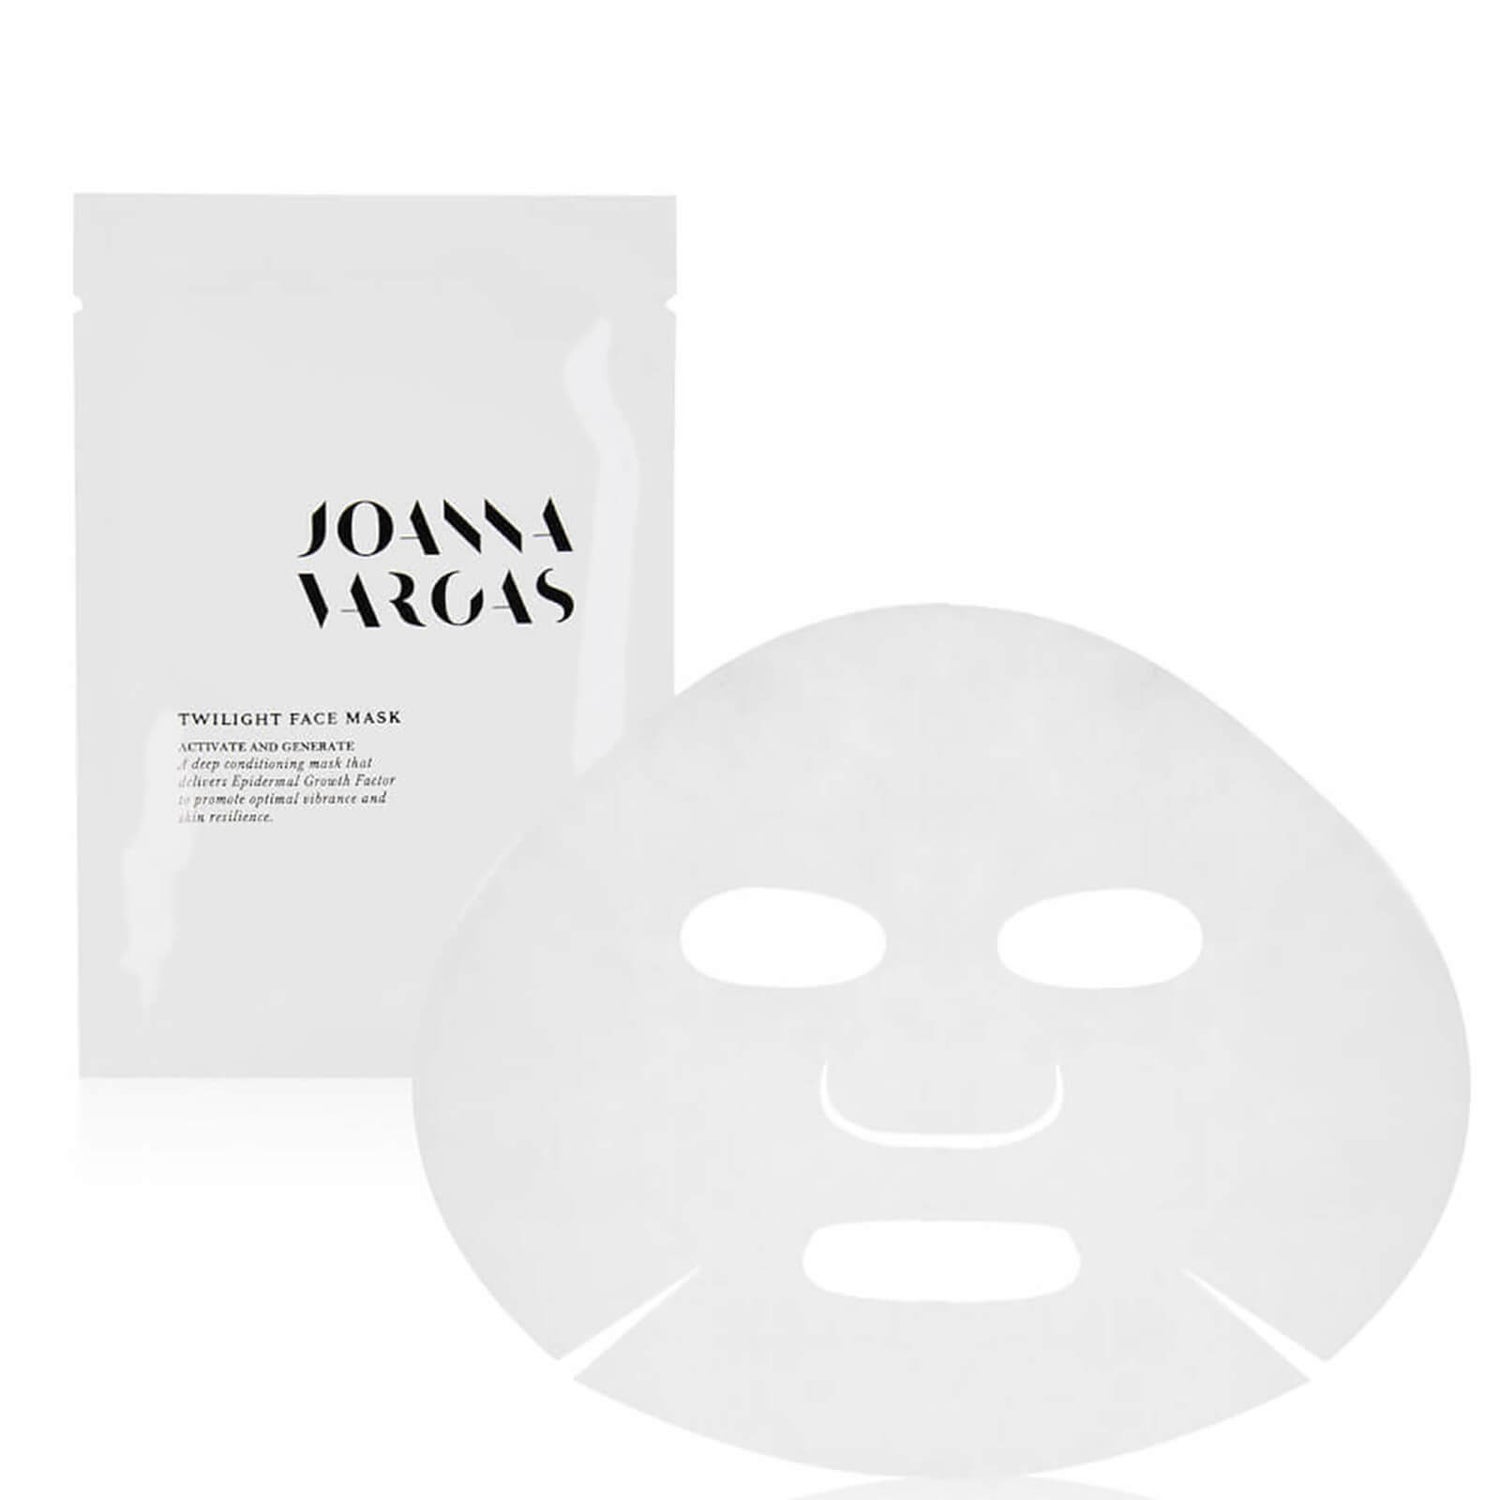 Joanna Vargas Twilight Face Mask 5 count